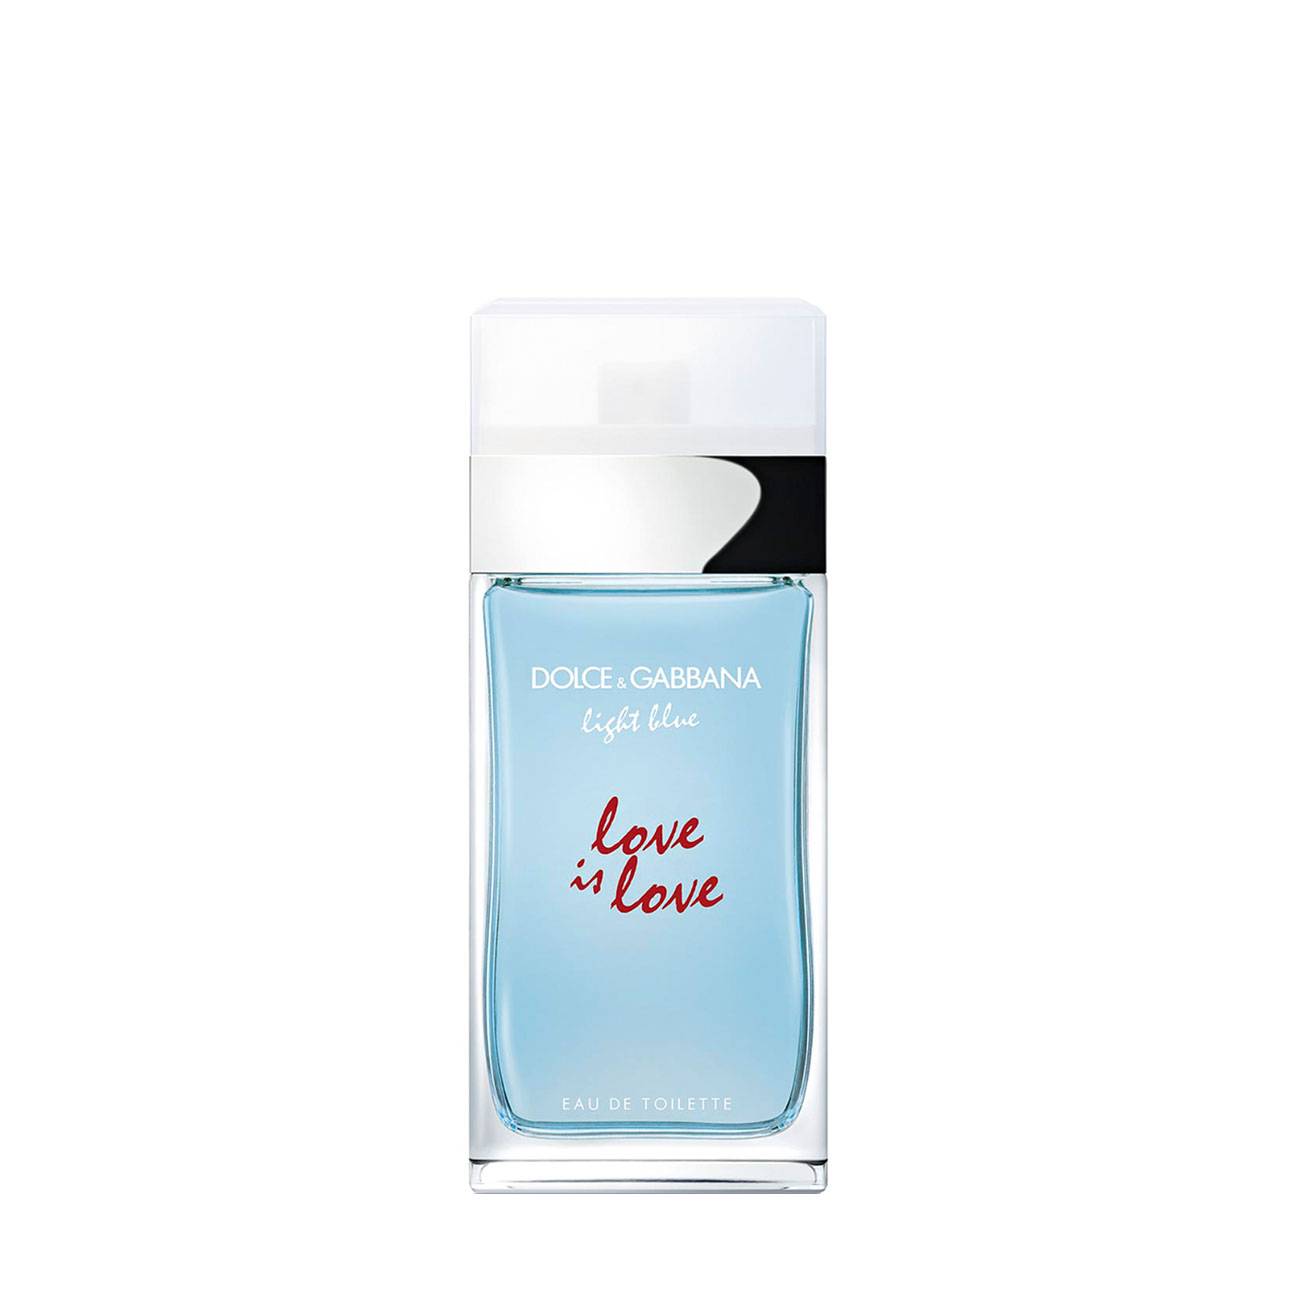 Apa de Toaleta Dolce & Gabbana LIGHT BLUE LOVE IS LOVE 50ml cu comanda online